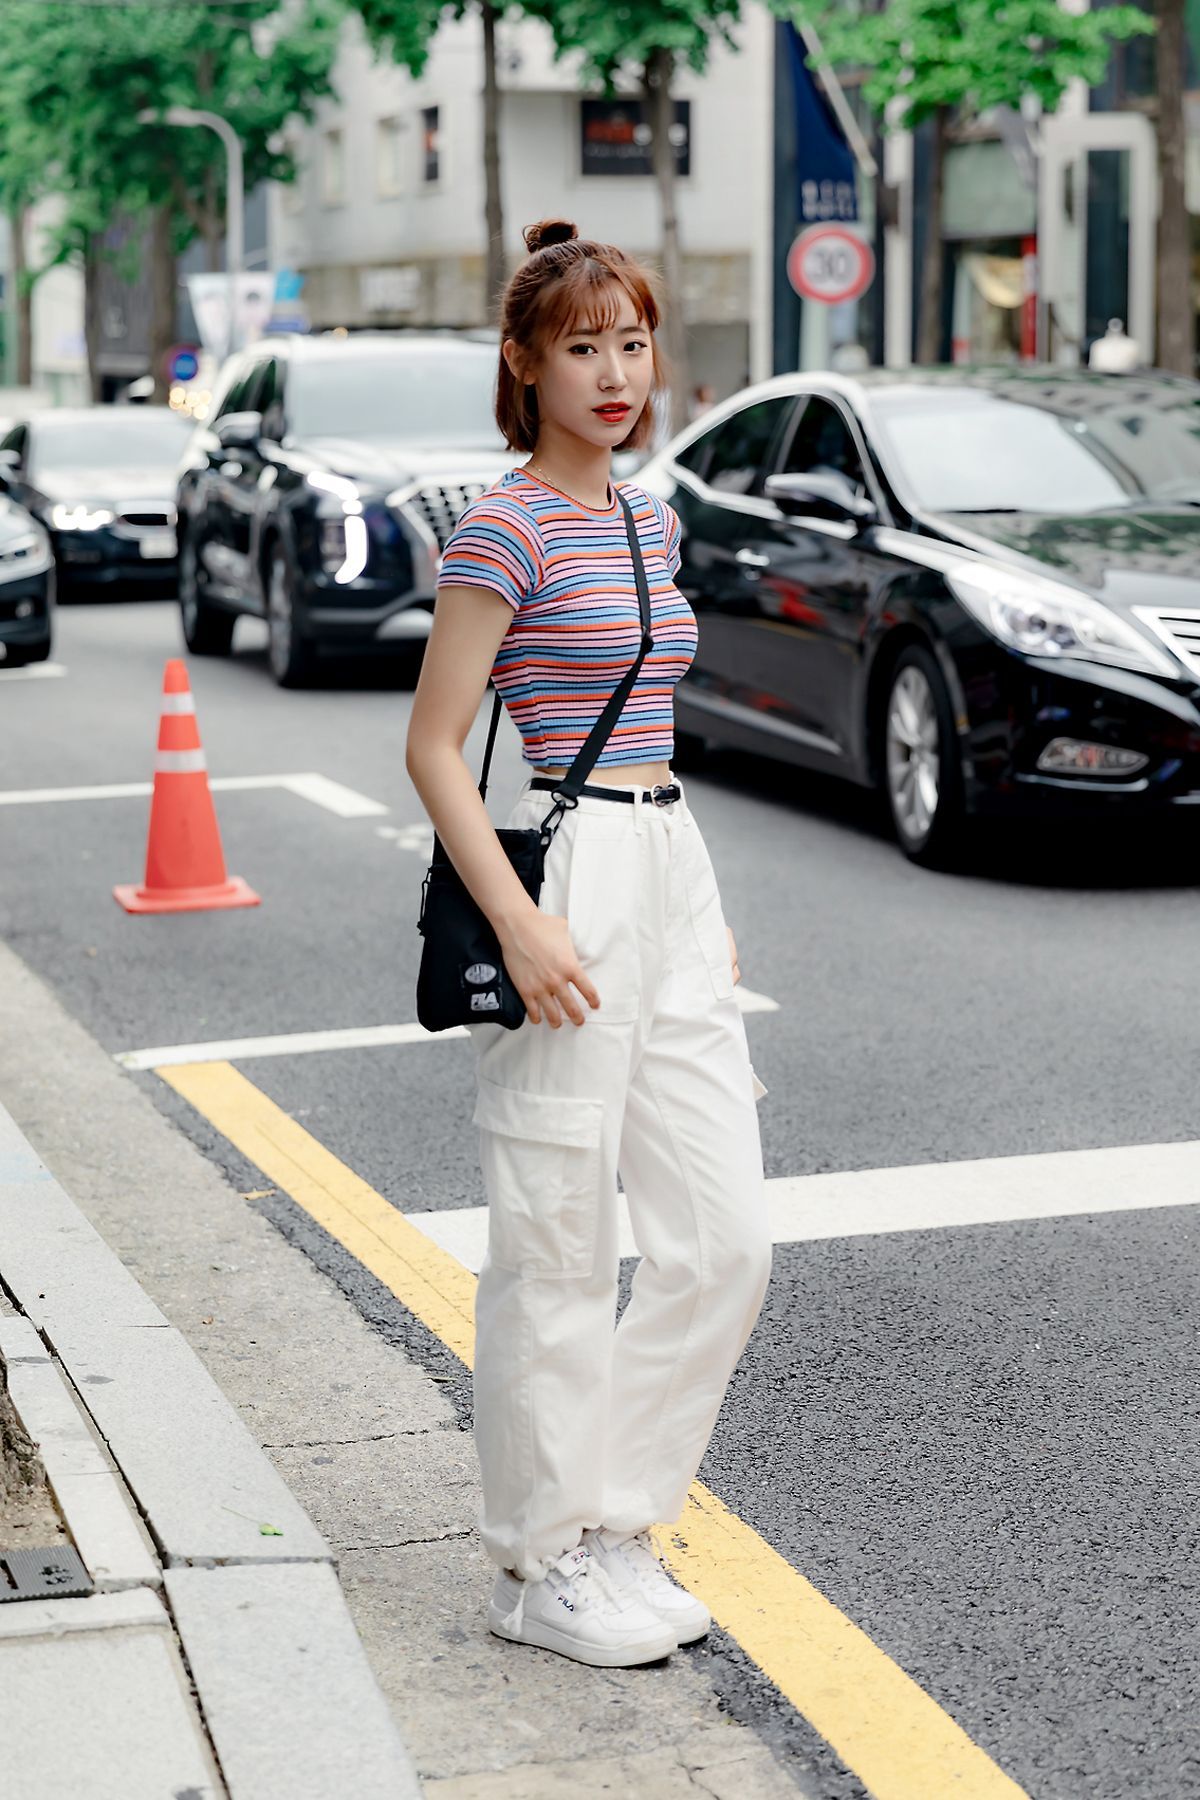 August 2019 Summer Seoul Women's Street Style - August 2019 Summer Seoul Women's Street Style -   12 korean style 2019 ideas